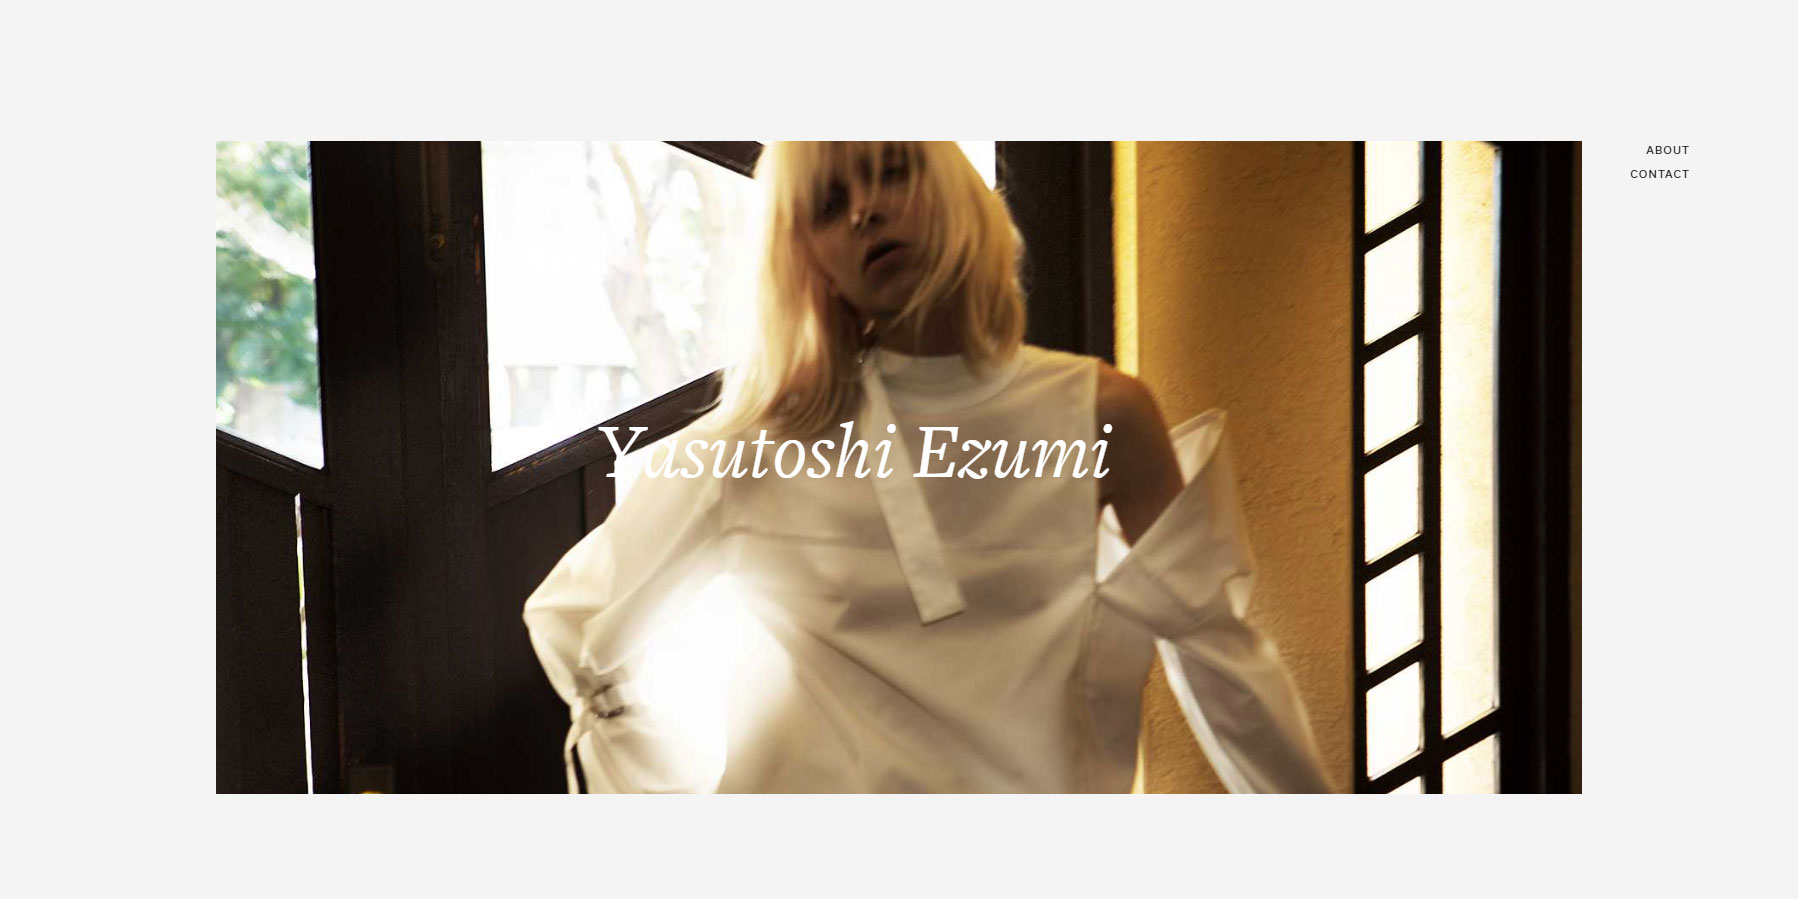 Mitsugu Takahashi - Website of the Day